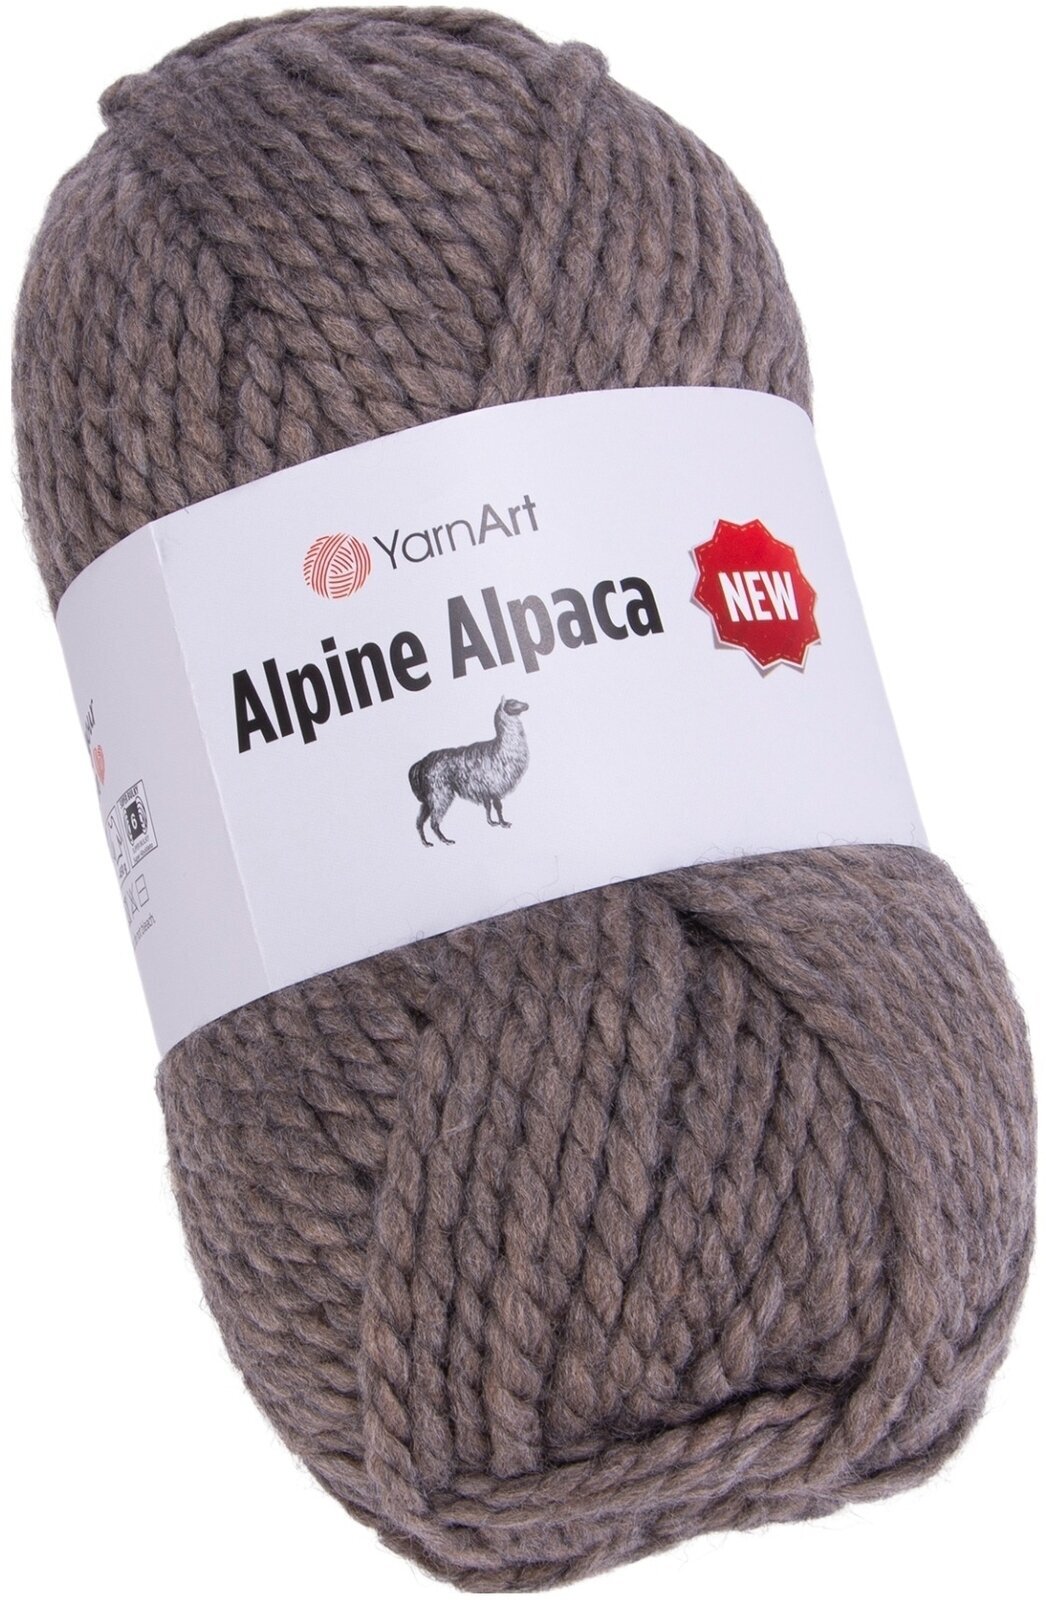 Breigaren Yarn Art Alpine Alpaca 1438 Breigaren